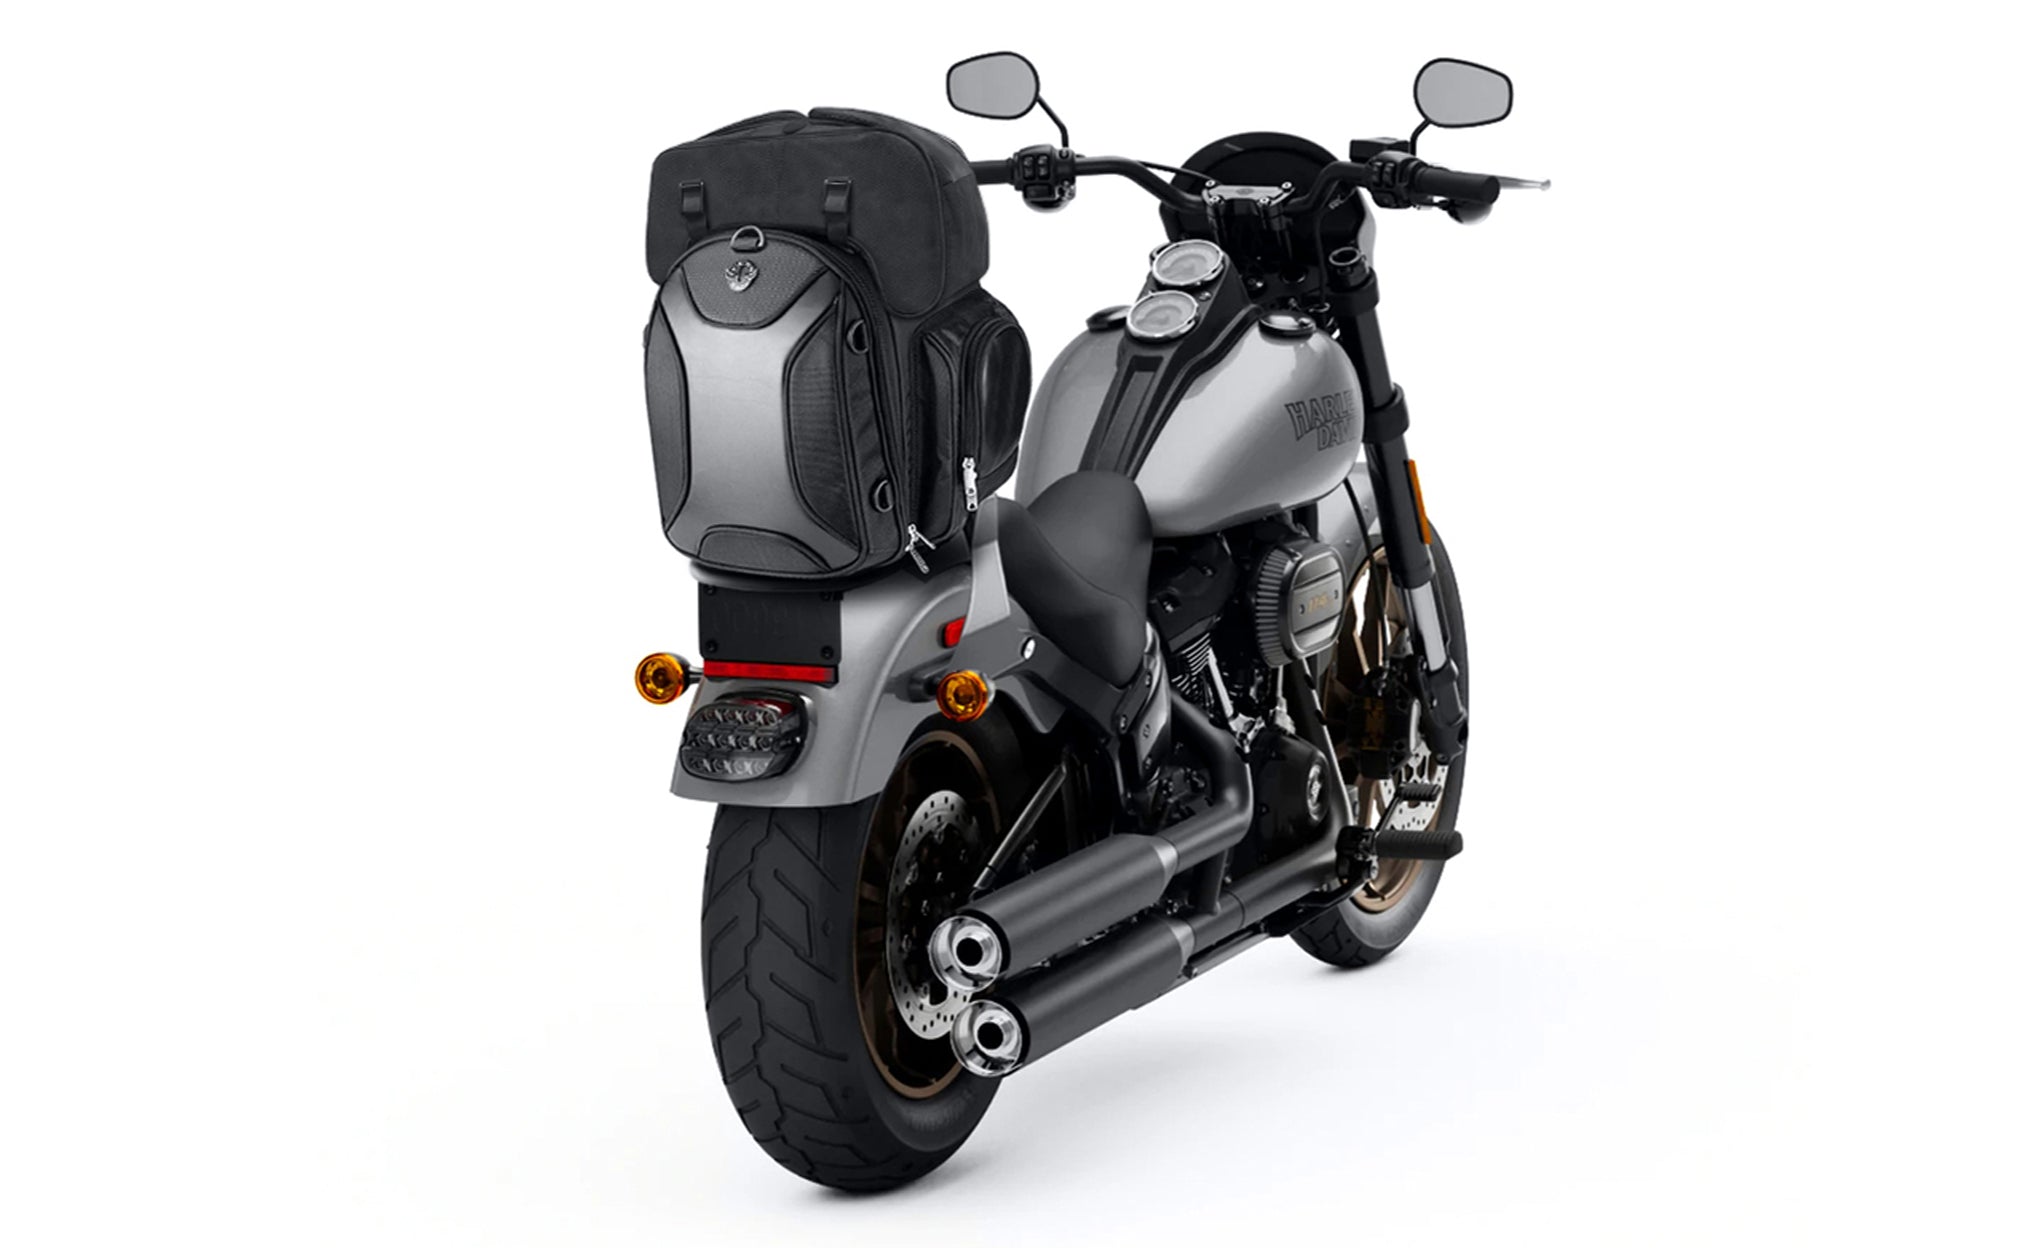 Viking Dagr Extra Large Triumph Motorcycle Sissy Bar Bag Bag on Bike View @expand